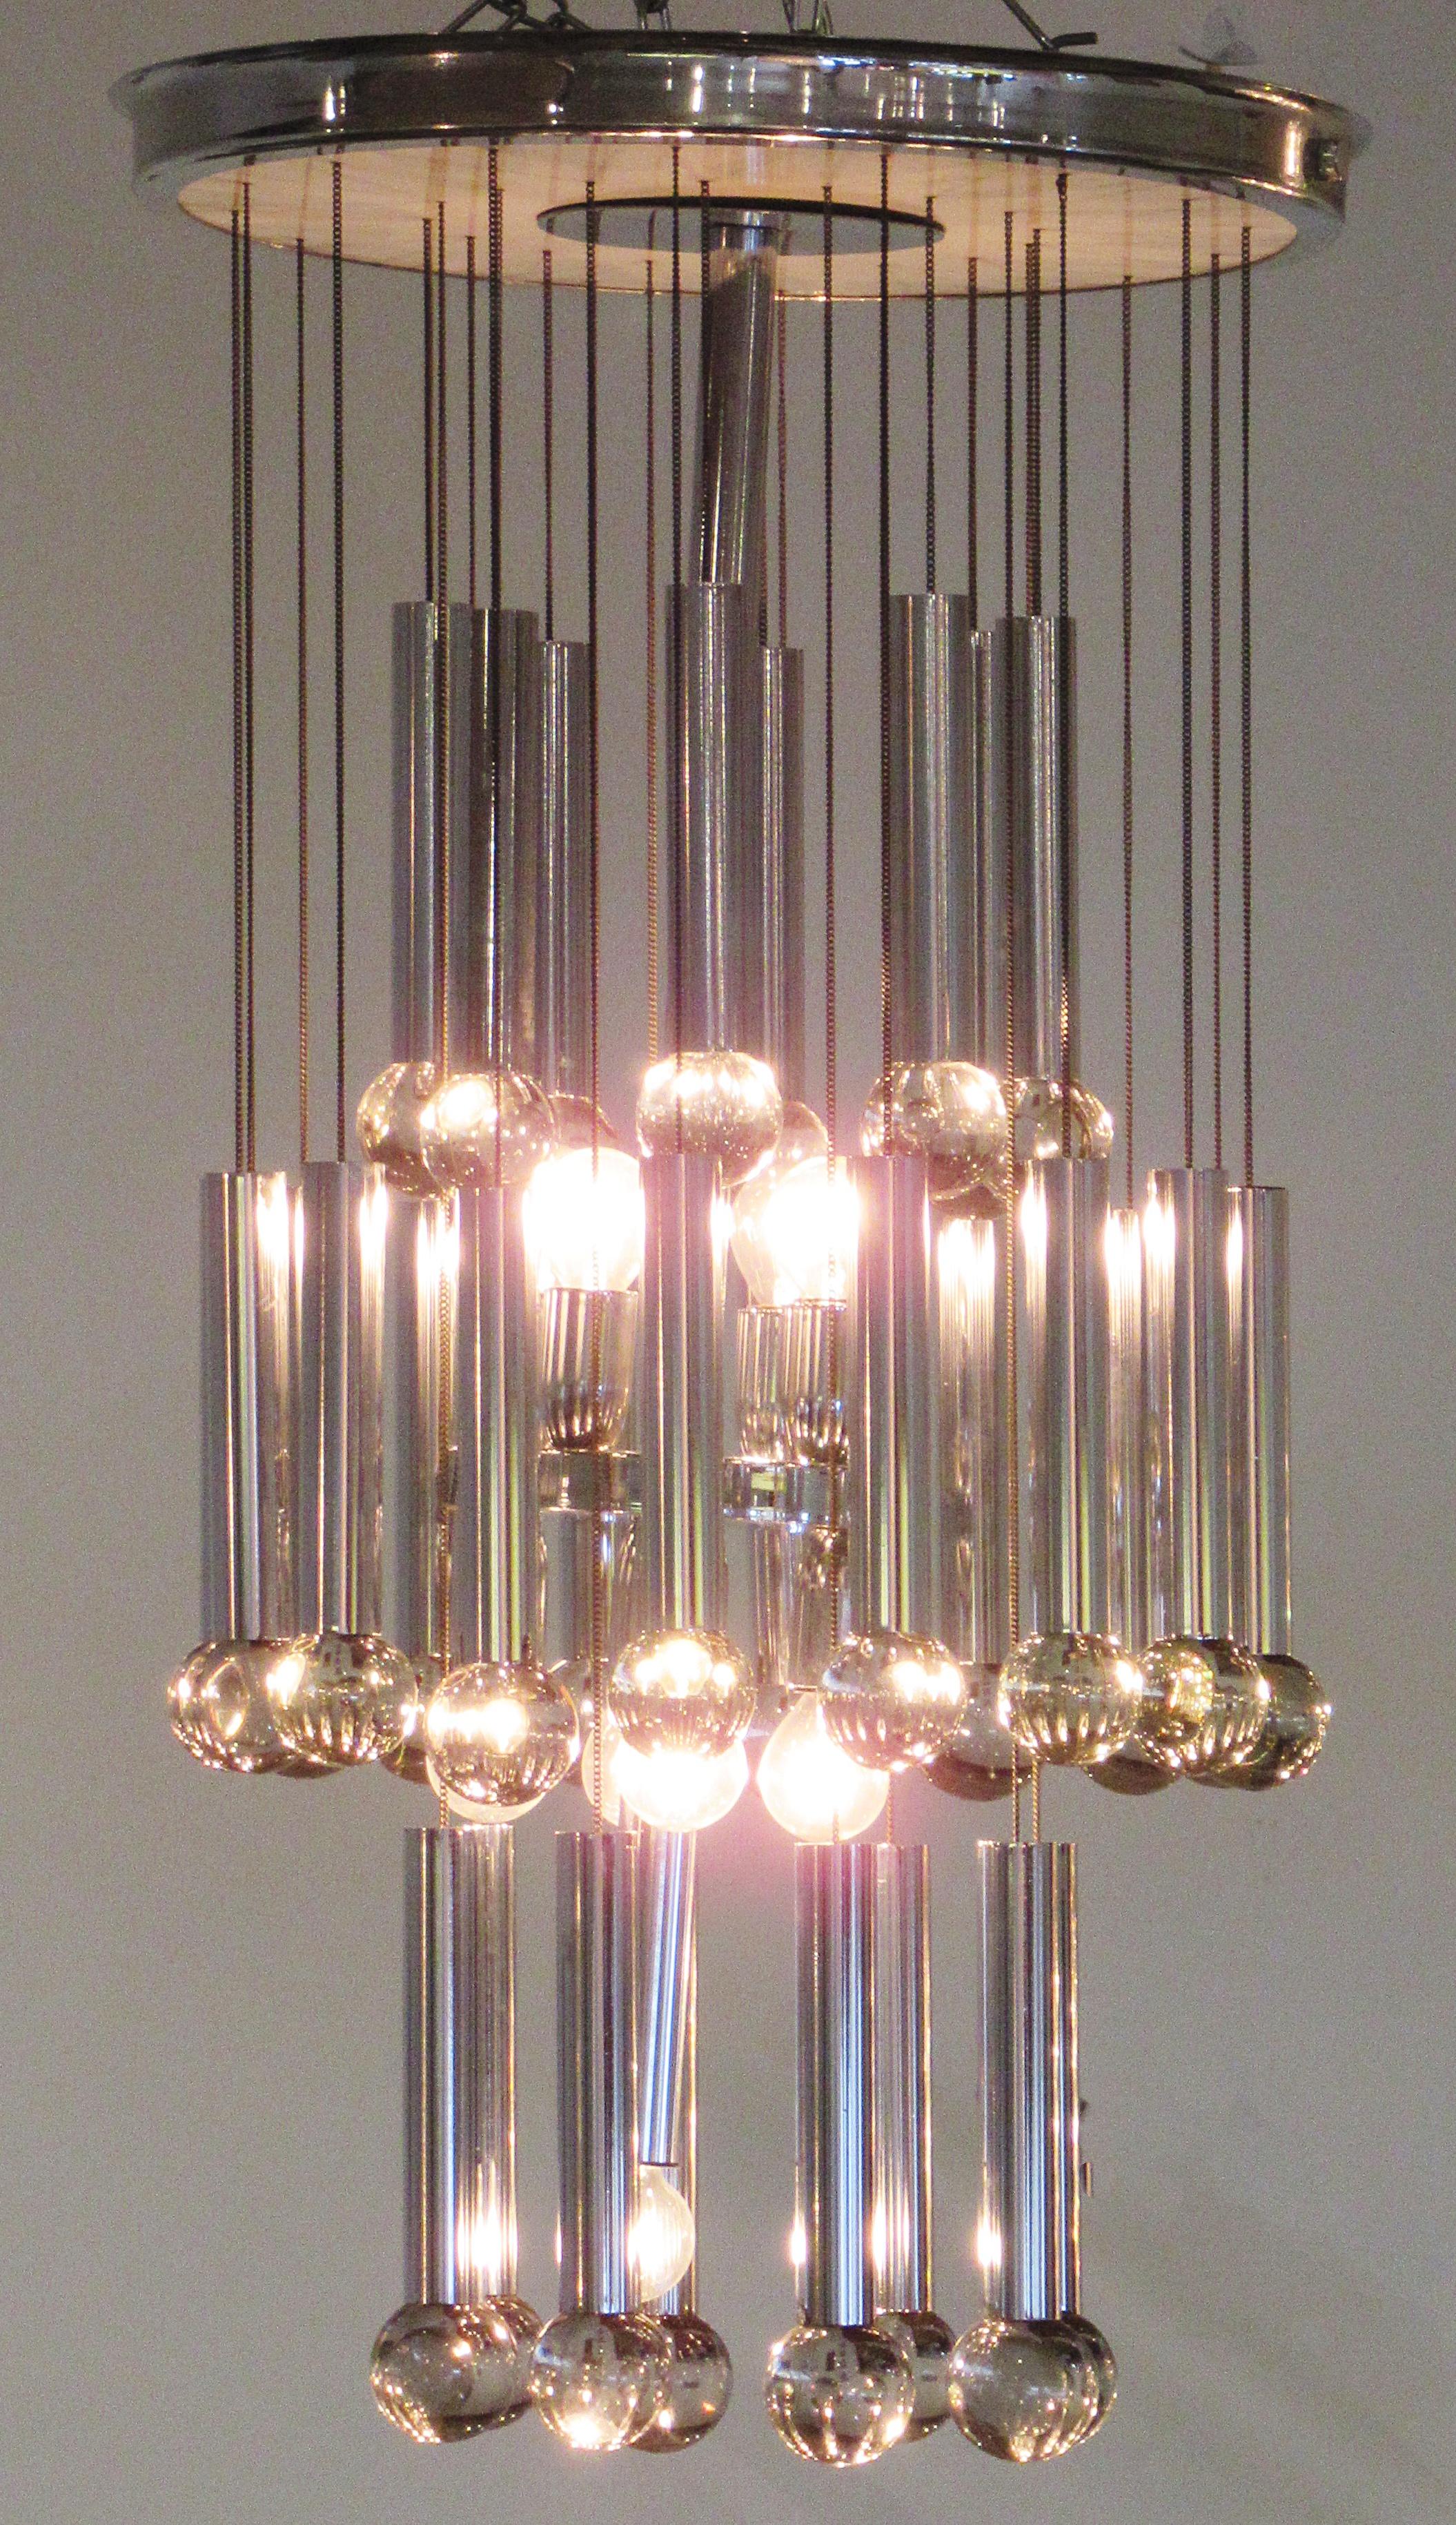 Italian modern polished chrome chandelier, mazzega, 1960's.